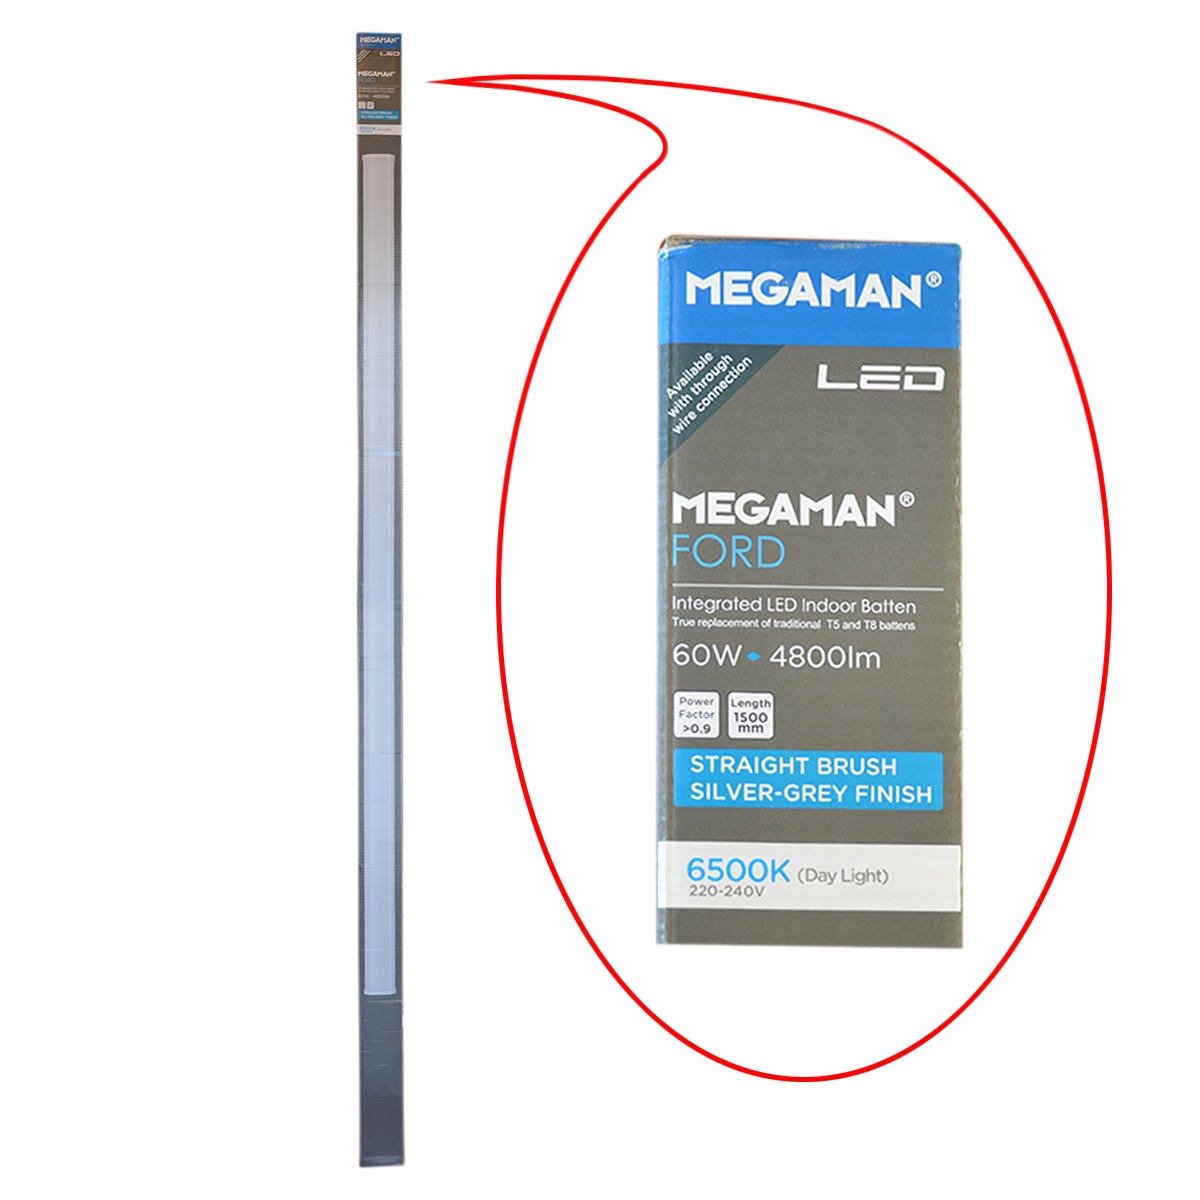 Megaman Integrated LED Indoor Downlight FORD FIB72200v0 60W Daylight 6500K (Ceiling Lights)